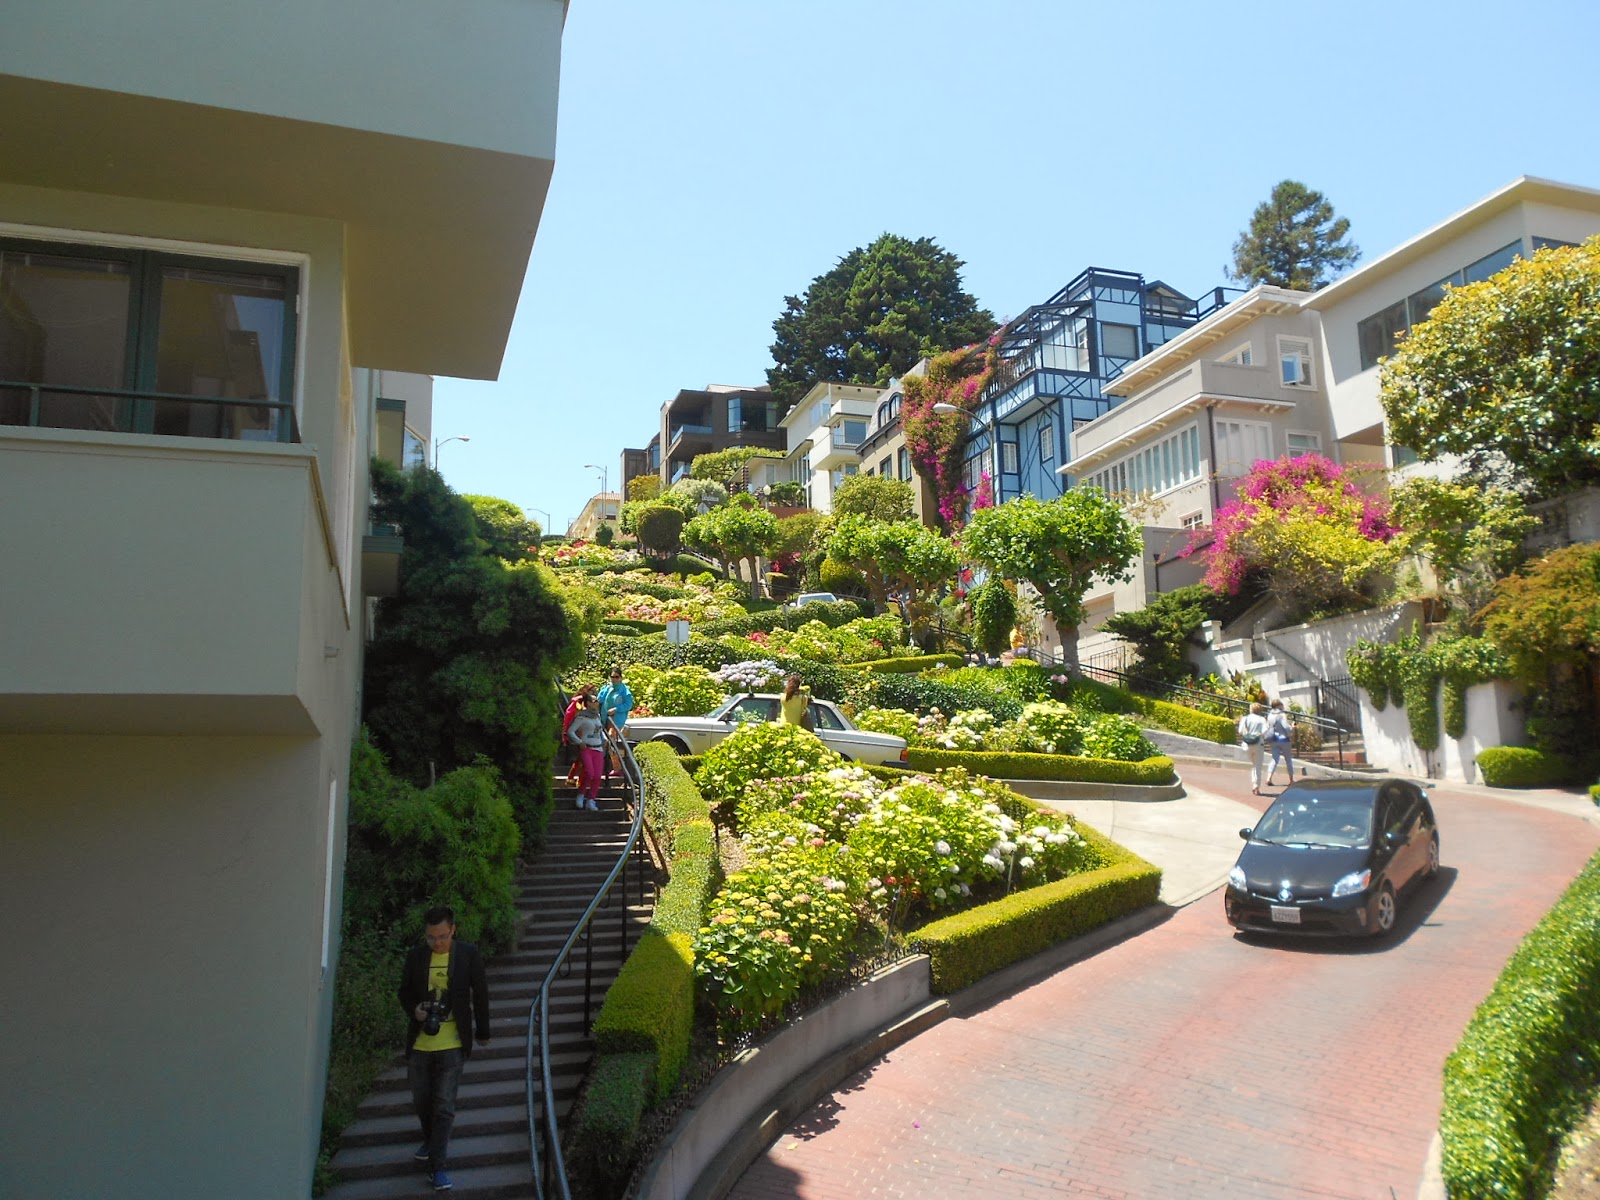 Lombard Street - São Francisco